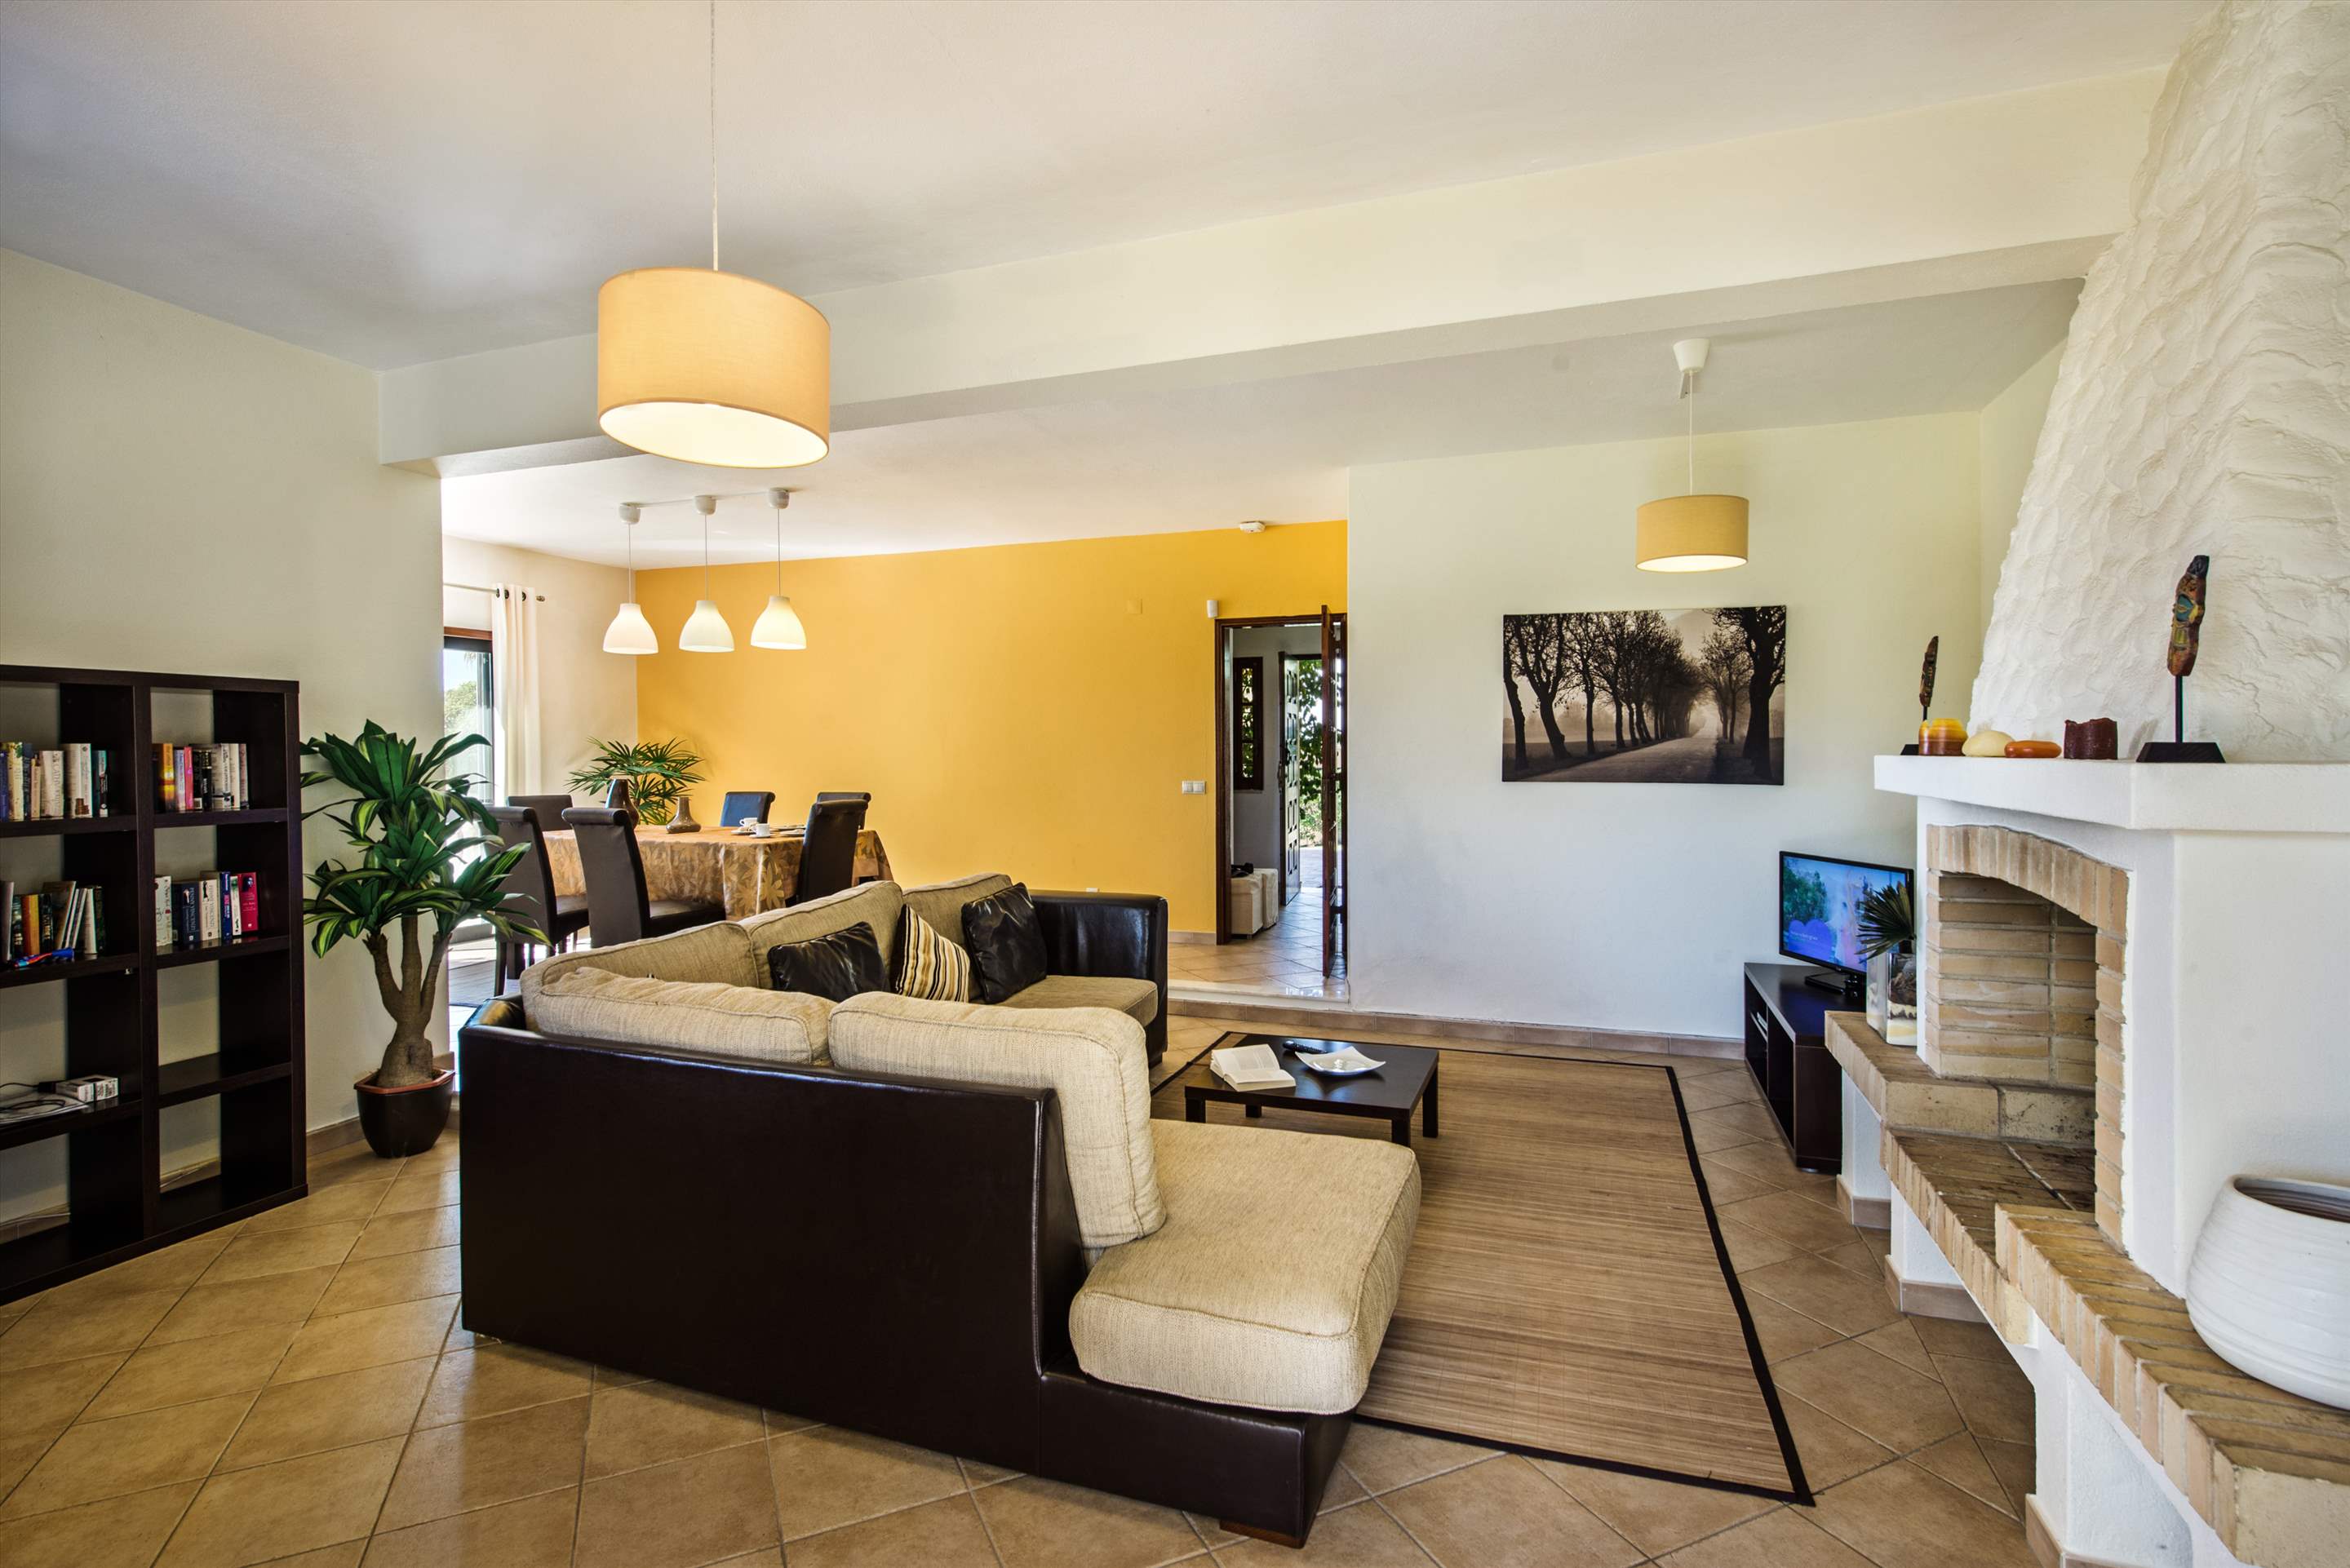 Villa Amendoeira, 7 to 8 persons rate, 4 bedroom villa in Gale, Vale da Parra and Guia, Algarve Photo #7